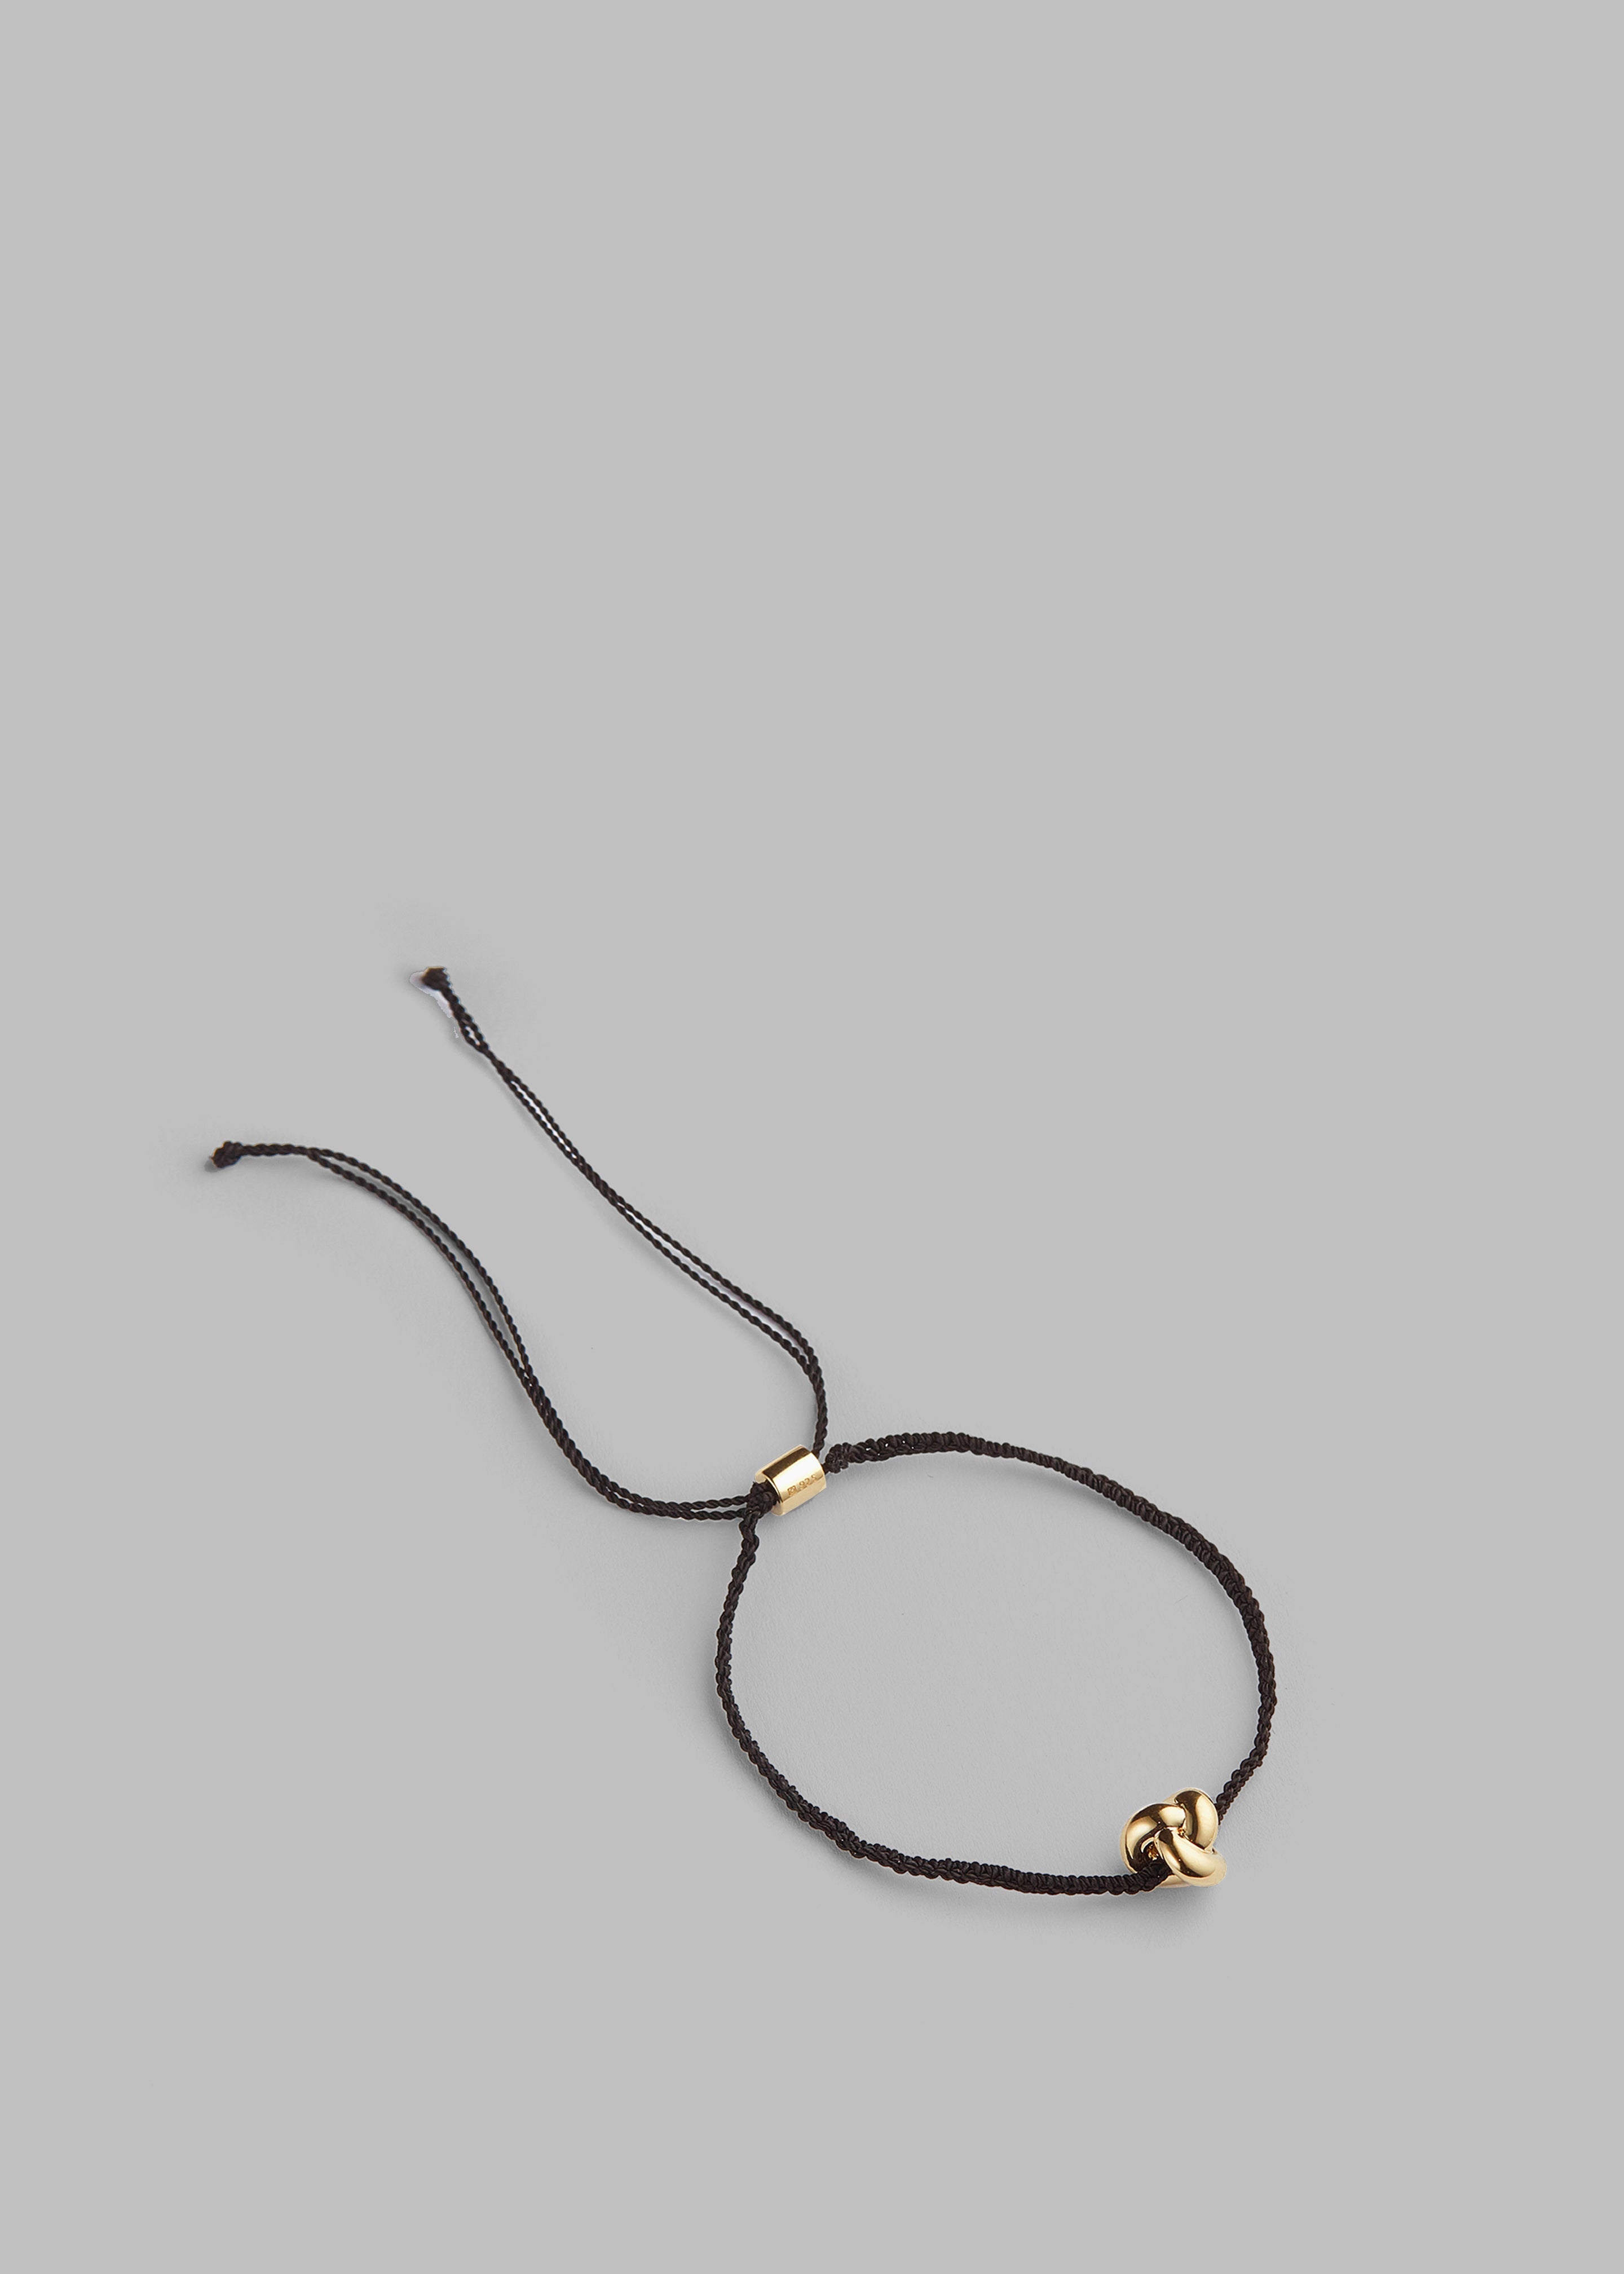 Otiumberg Knot Cord Bracelet - Gold Vermeil - 1